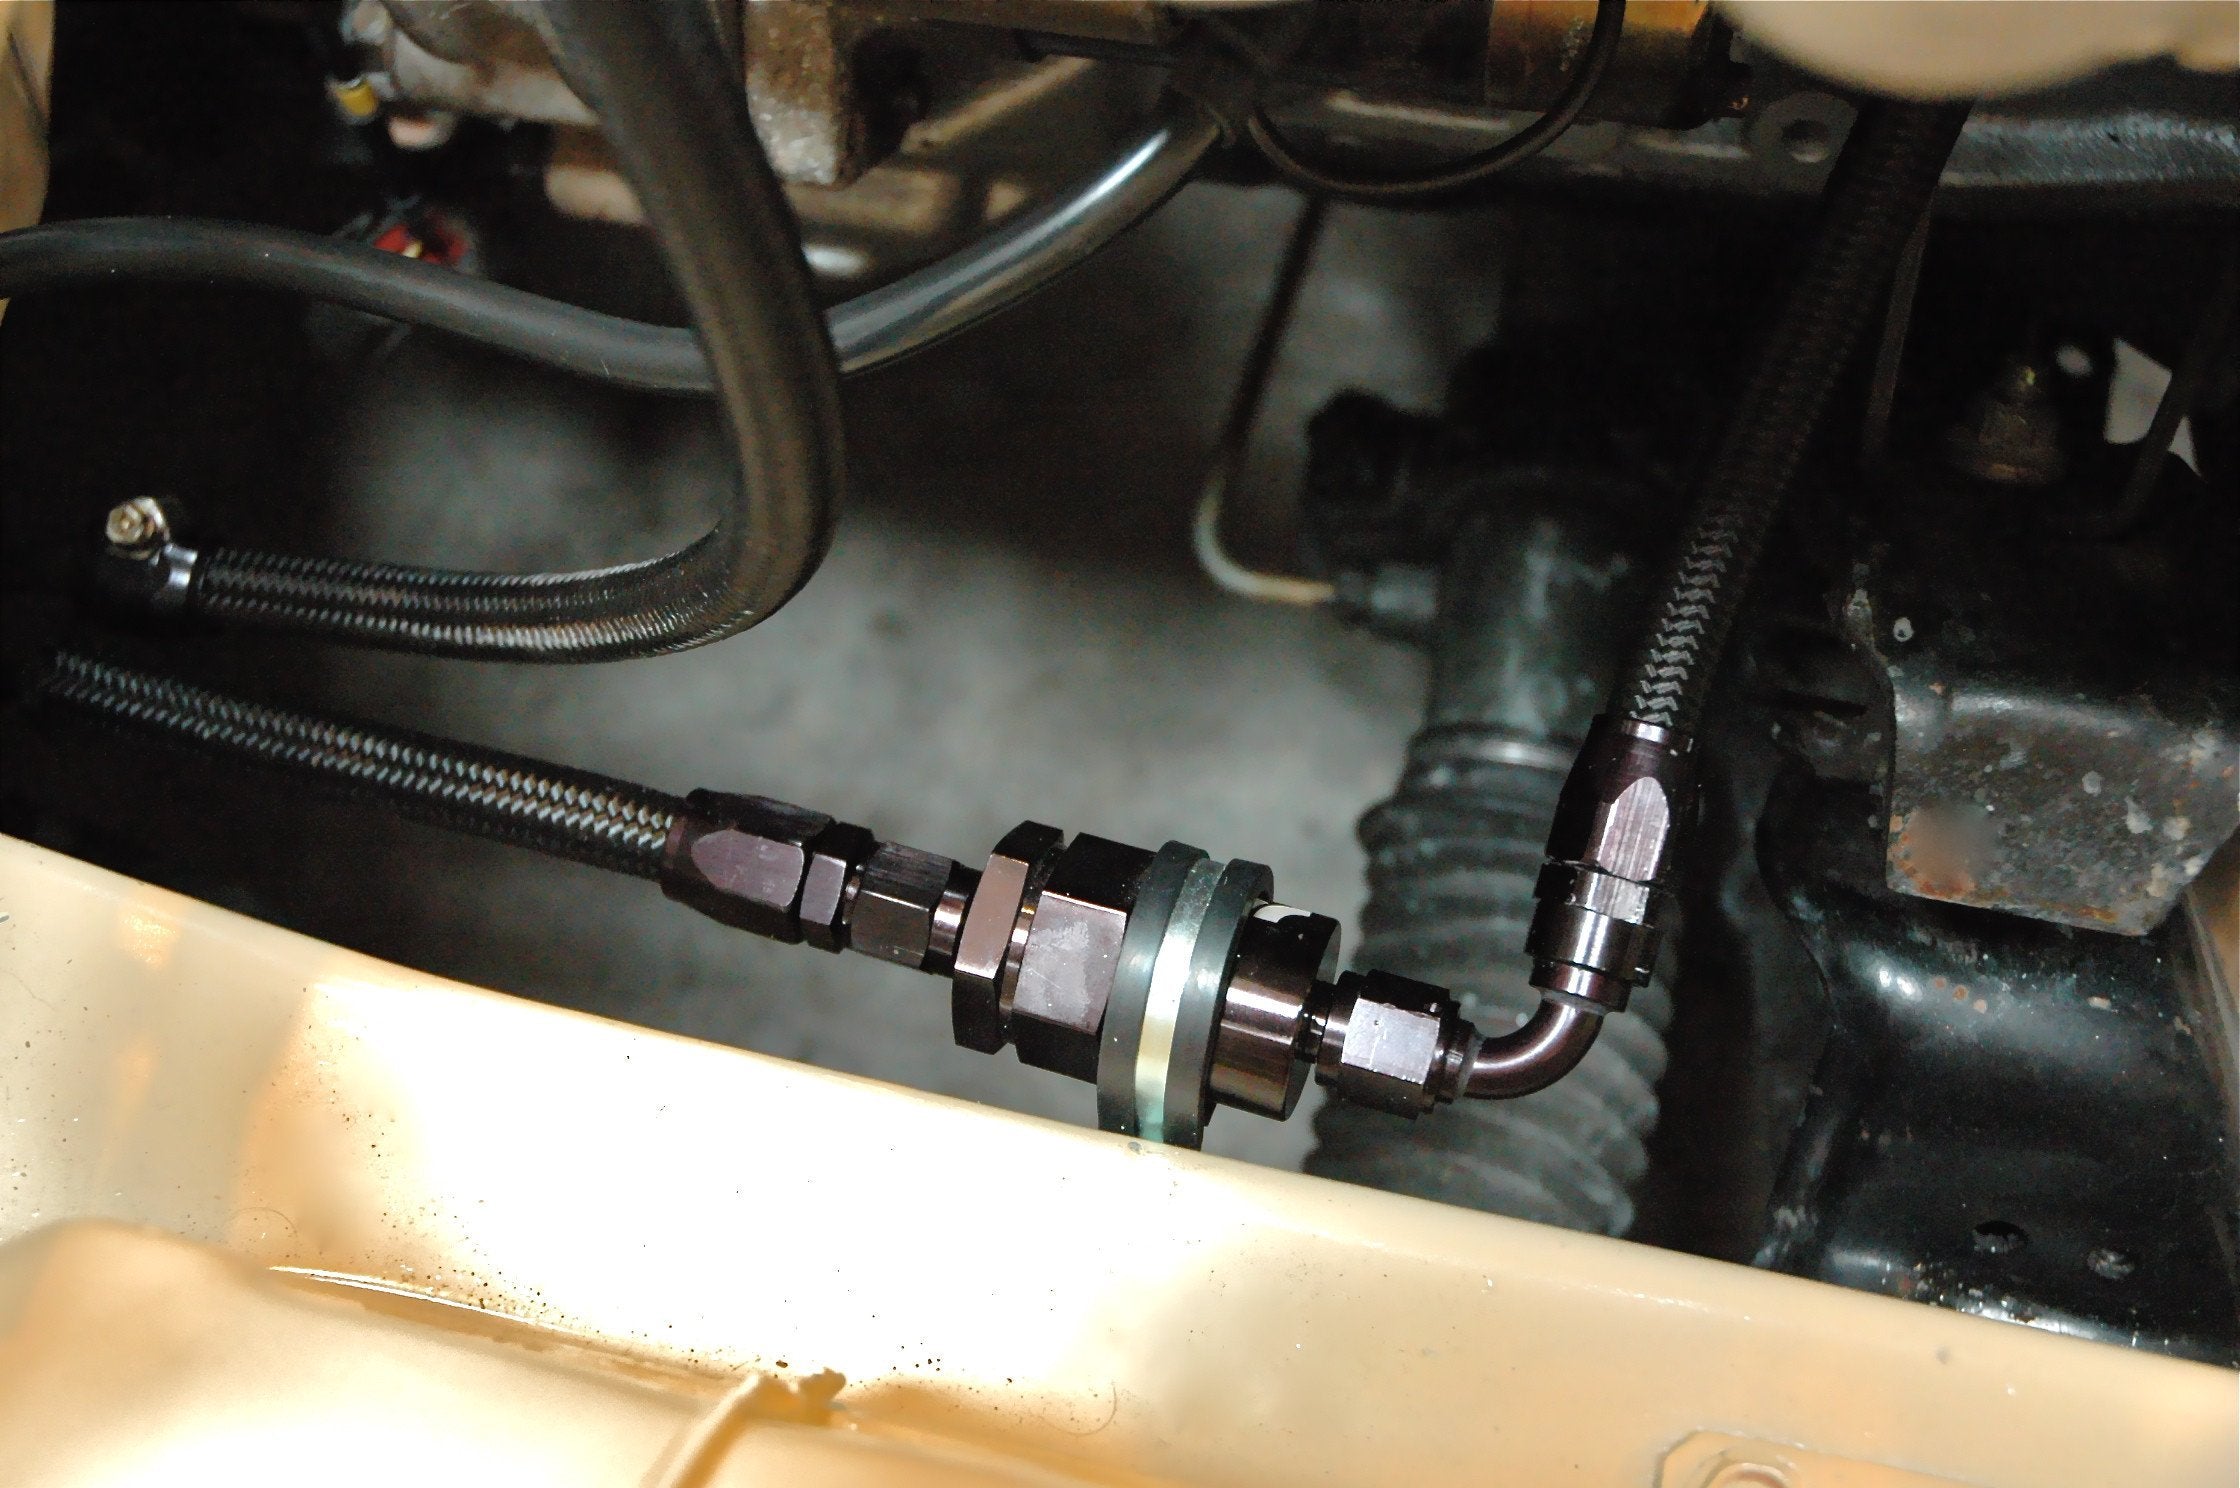 CHASE BAYS Nissan Silvia S13 S14 S15 Kraftstoff Leitung Kit mit Nissan RB20DET RB25DET RB26DETT Swap - PARTS33 GmbH